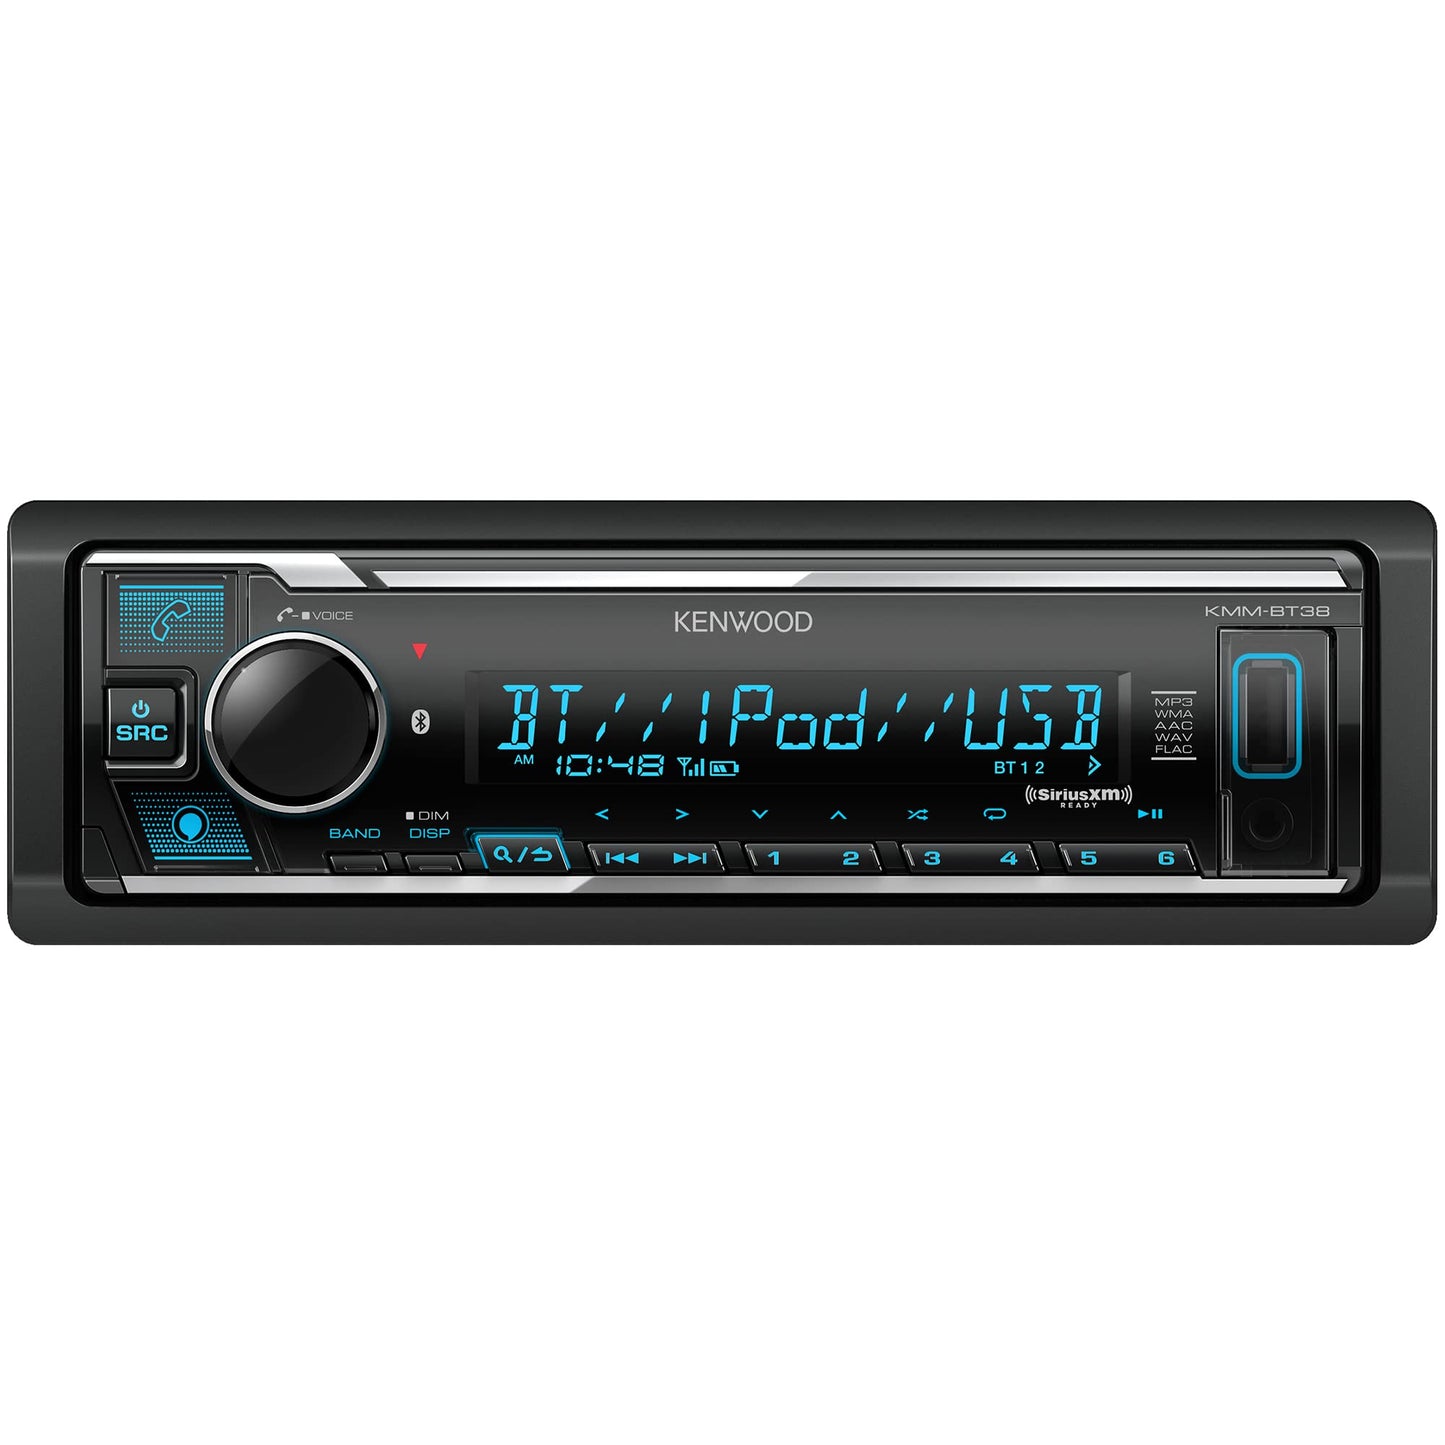 KENWOOD KMM-BT38 Bluetooth Car Stereo with USB Port, AM/FM Radio, MP3 Player,...